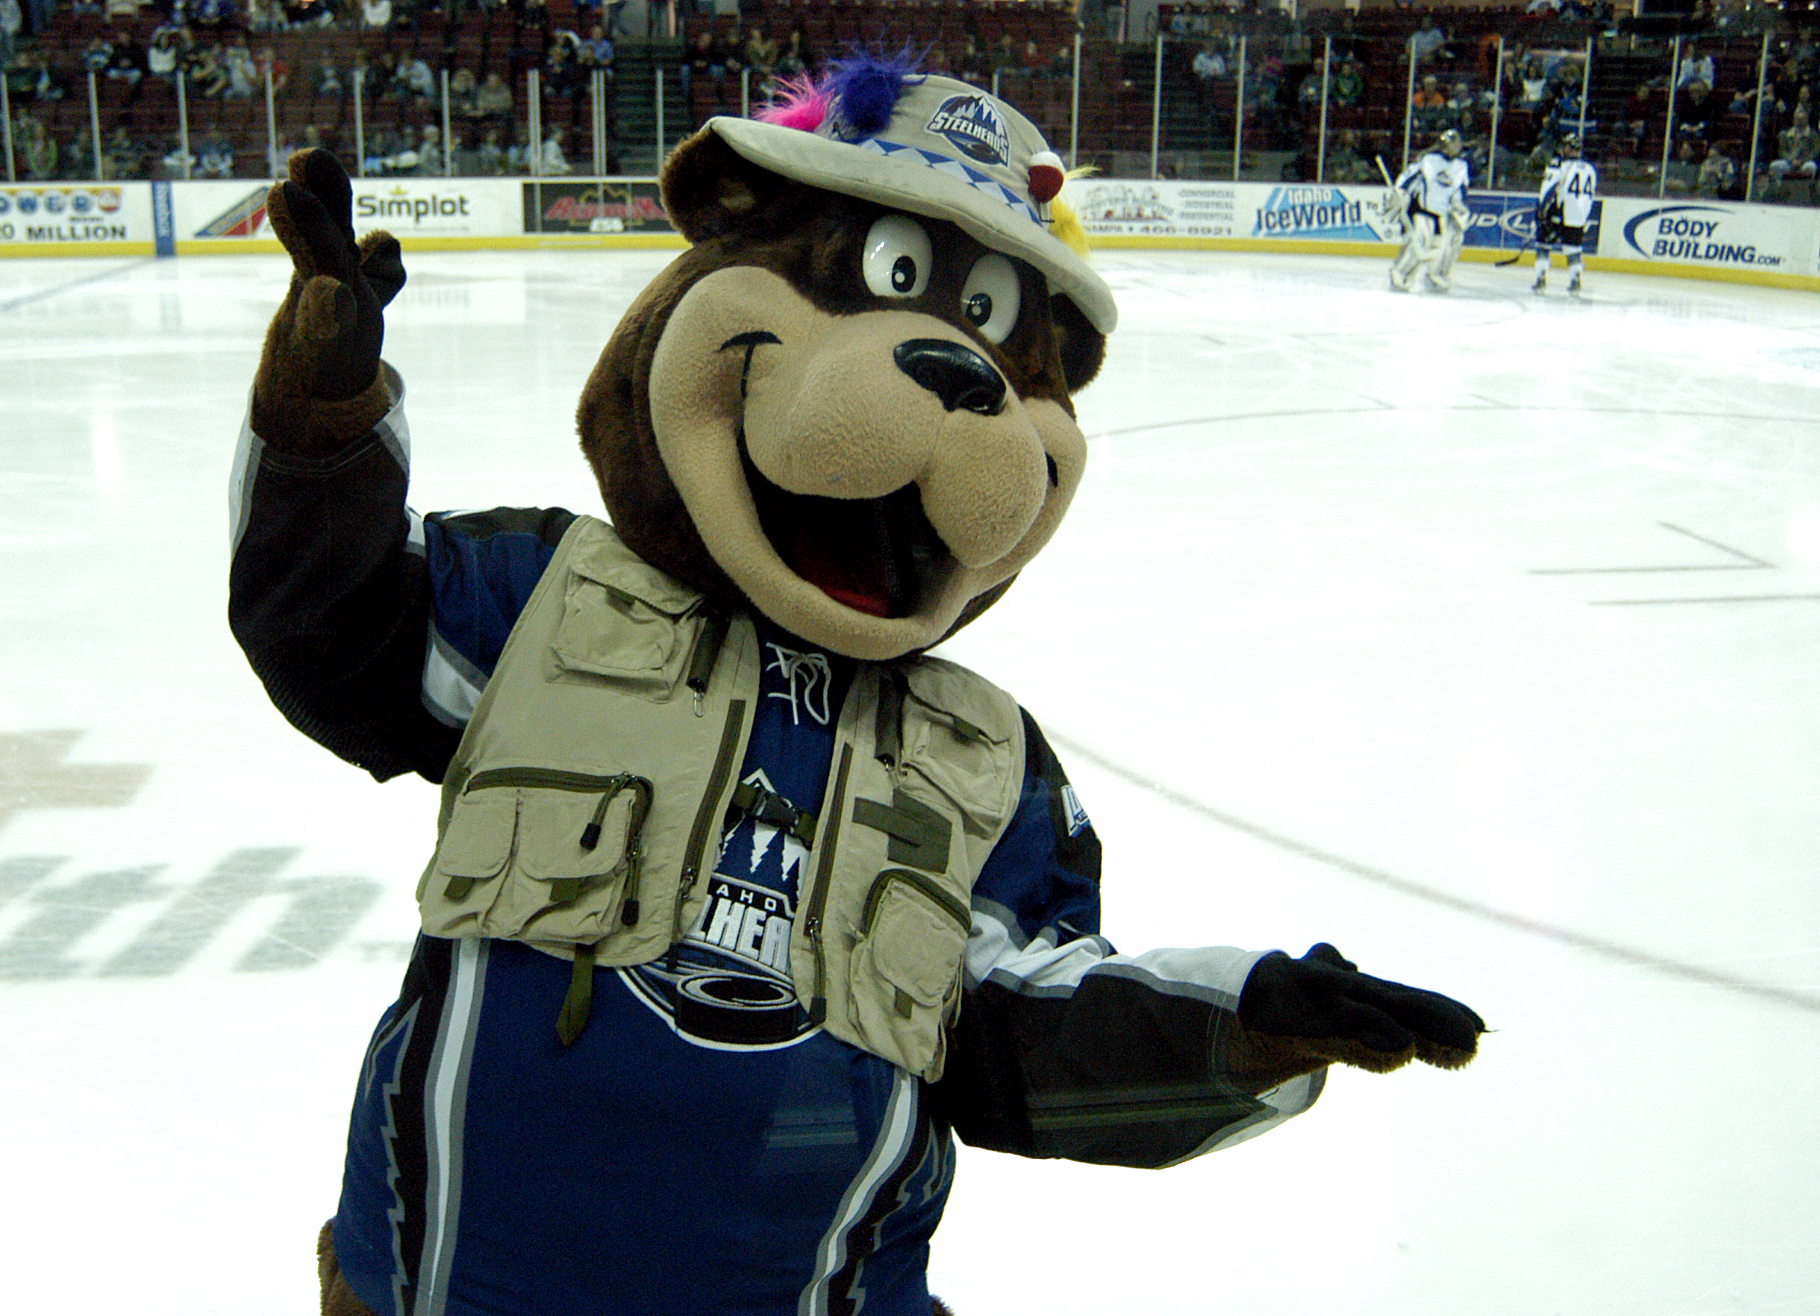 Idaho Steelheads hockey mascot named "Blue the bear" who was created by The Idaho Steelheads Ad agency in Boise Idaho, 116 & West